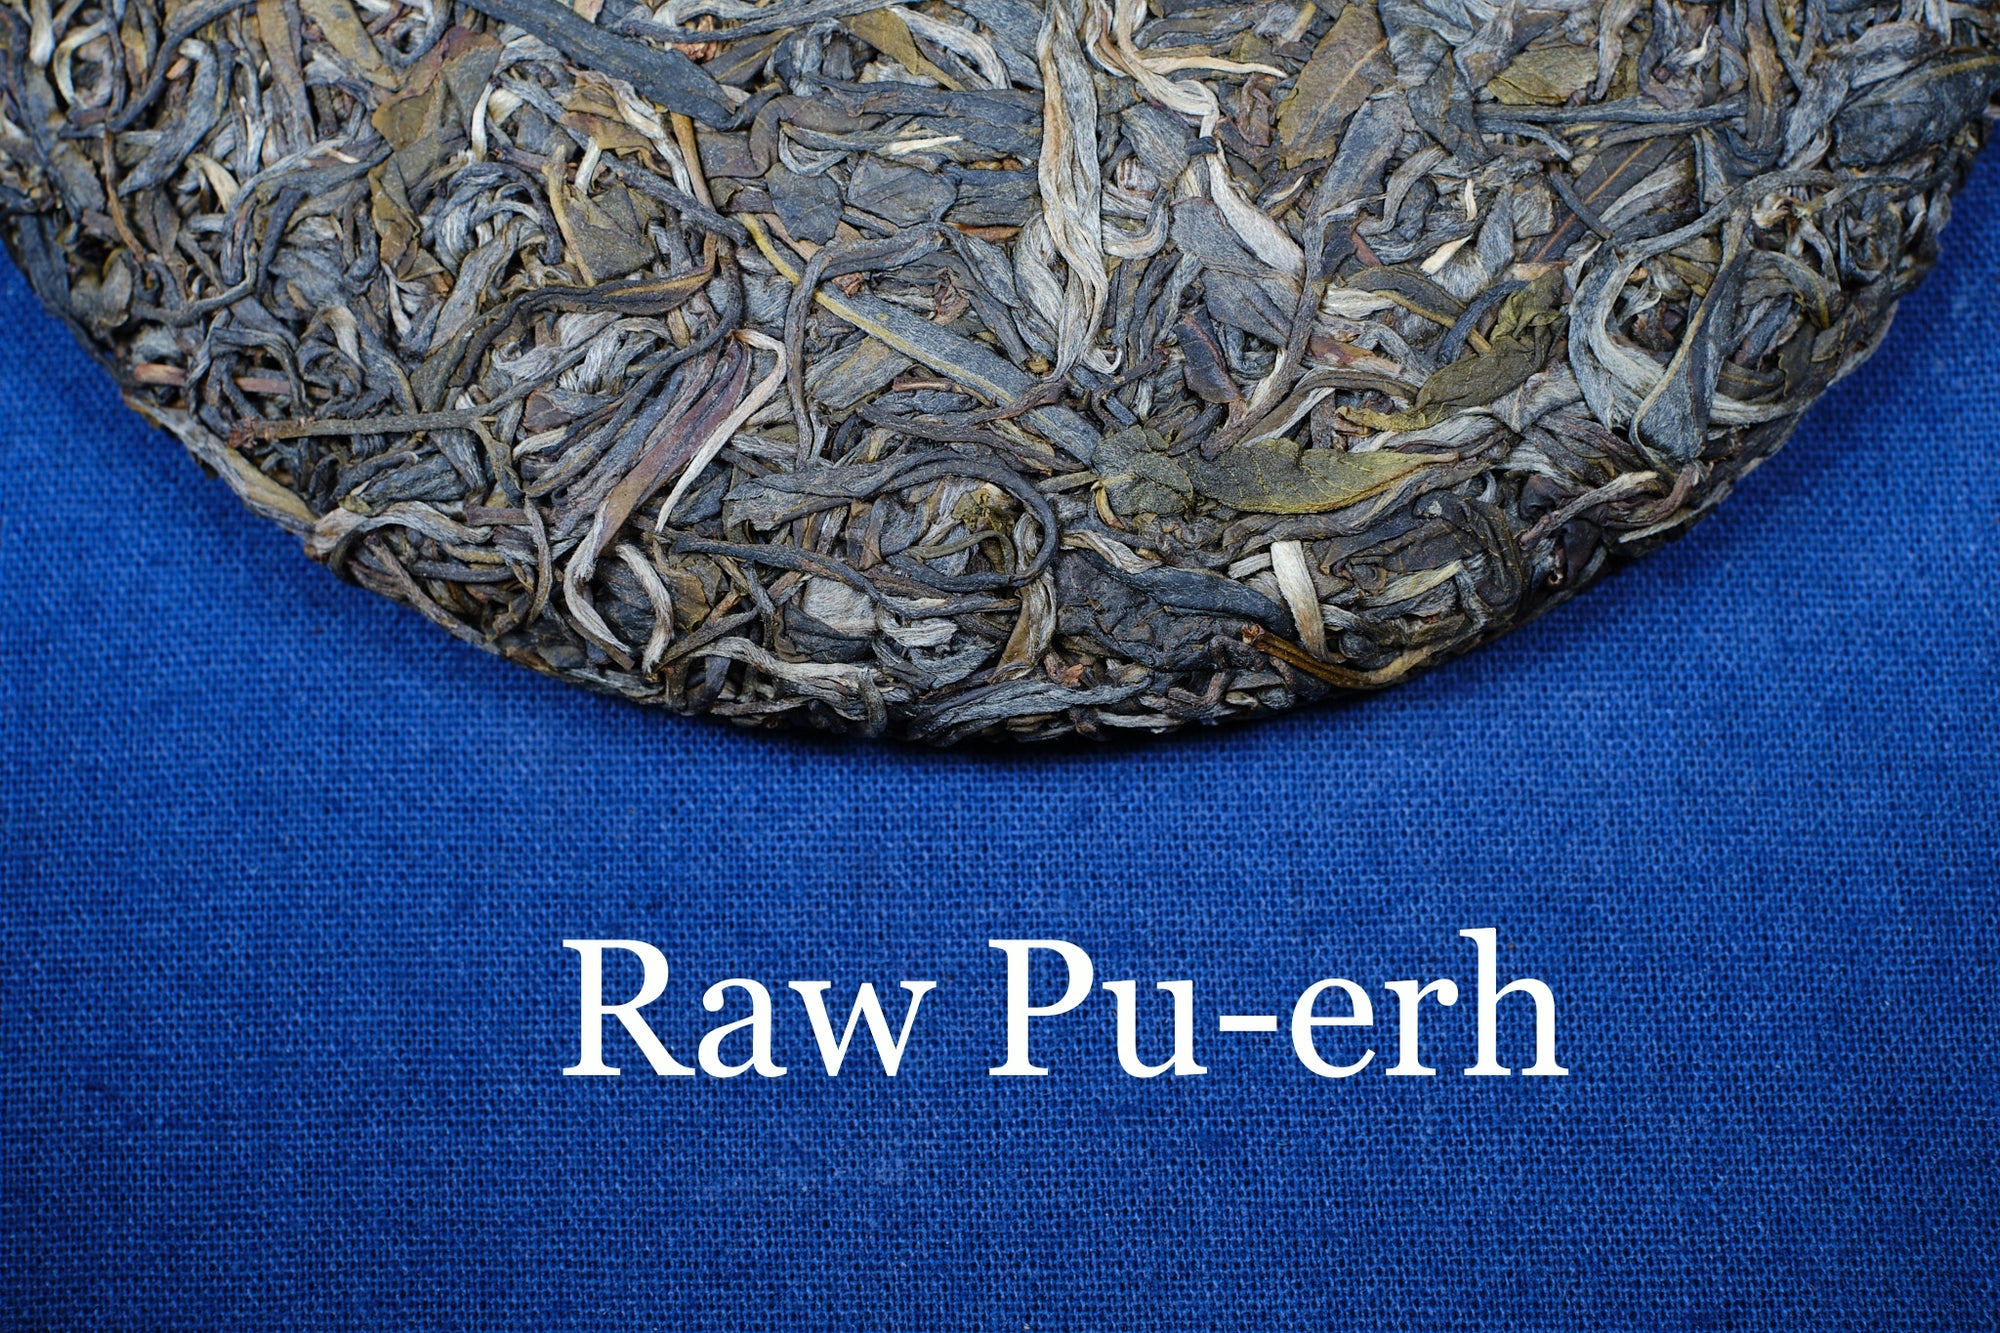 Raw Pu-erh Tea